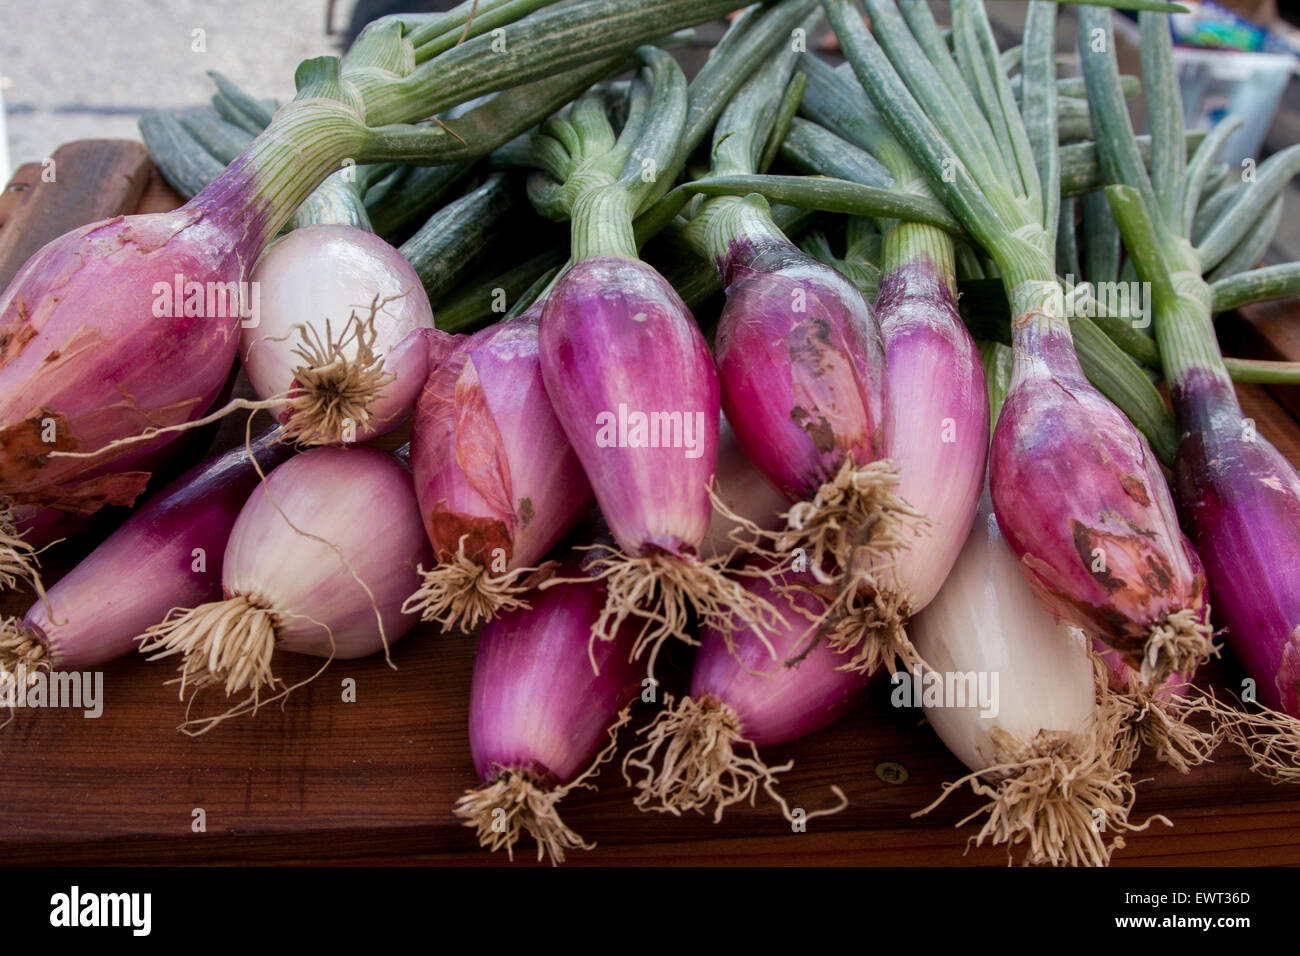 Red Torpedo Onions at the Berkeley Farmers' Market in Berkeley, California. Stock Photo